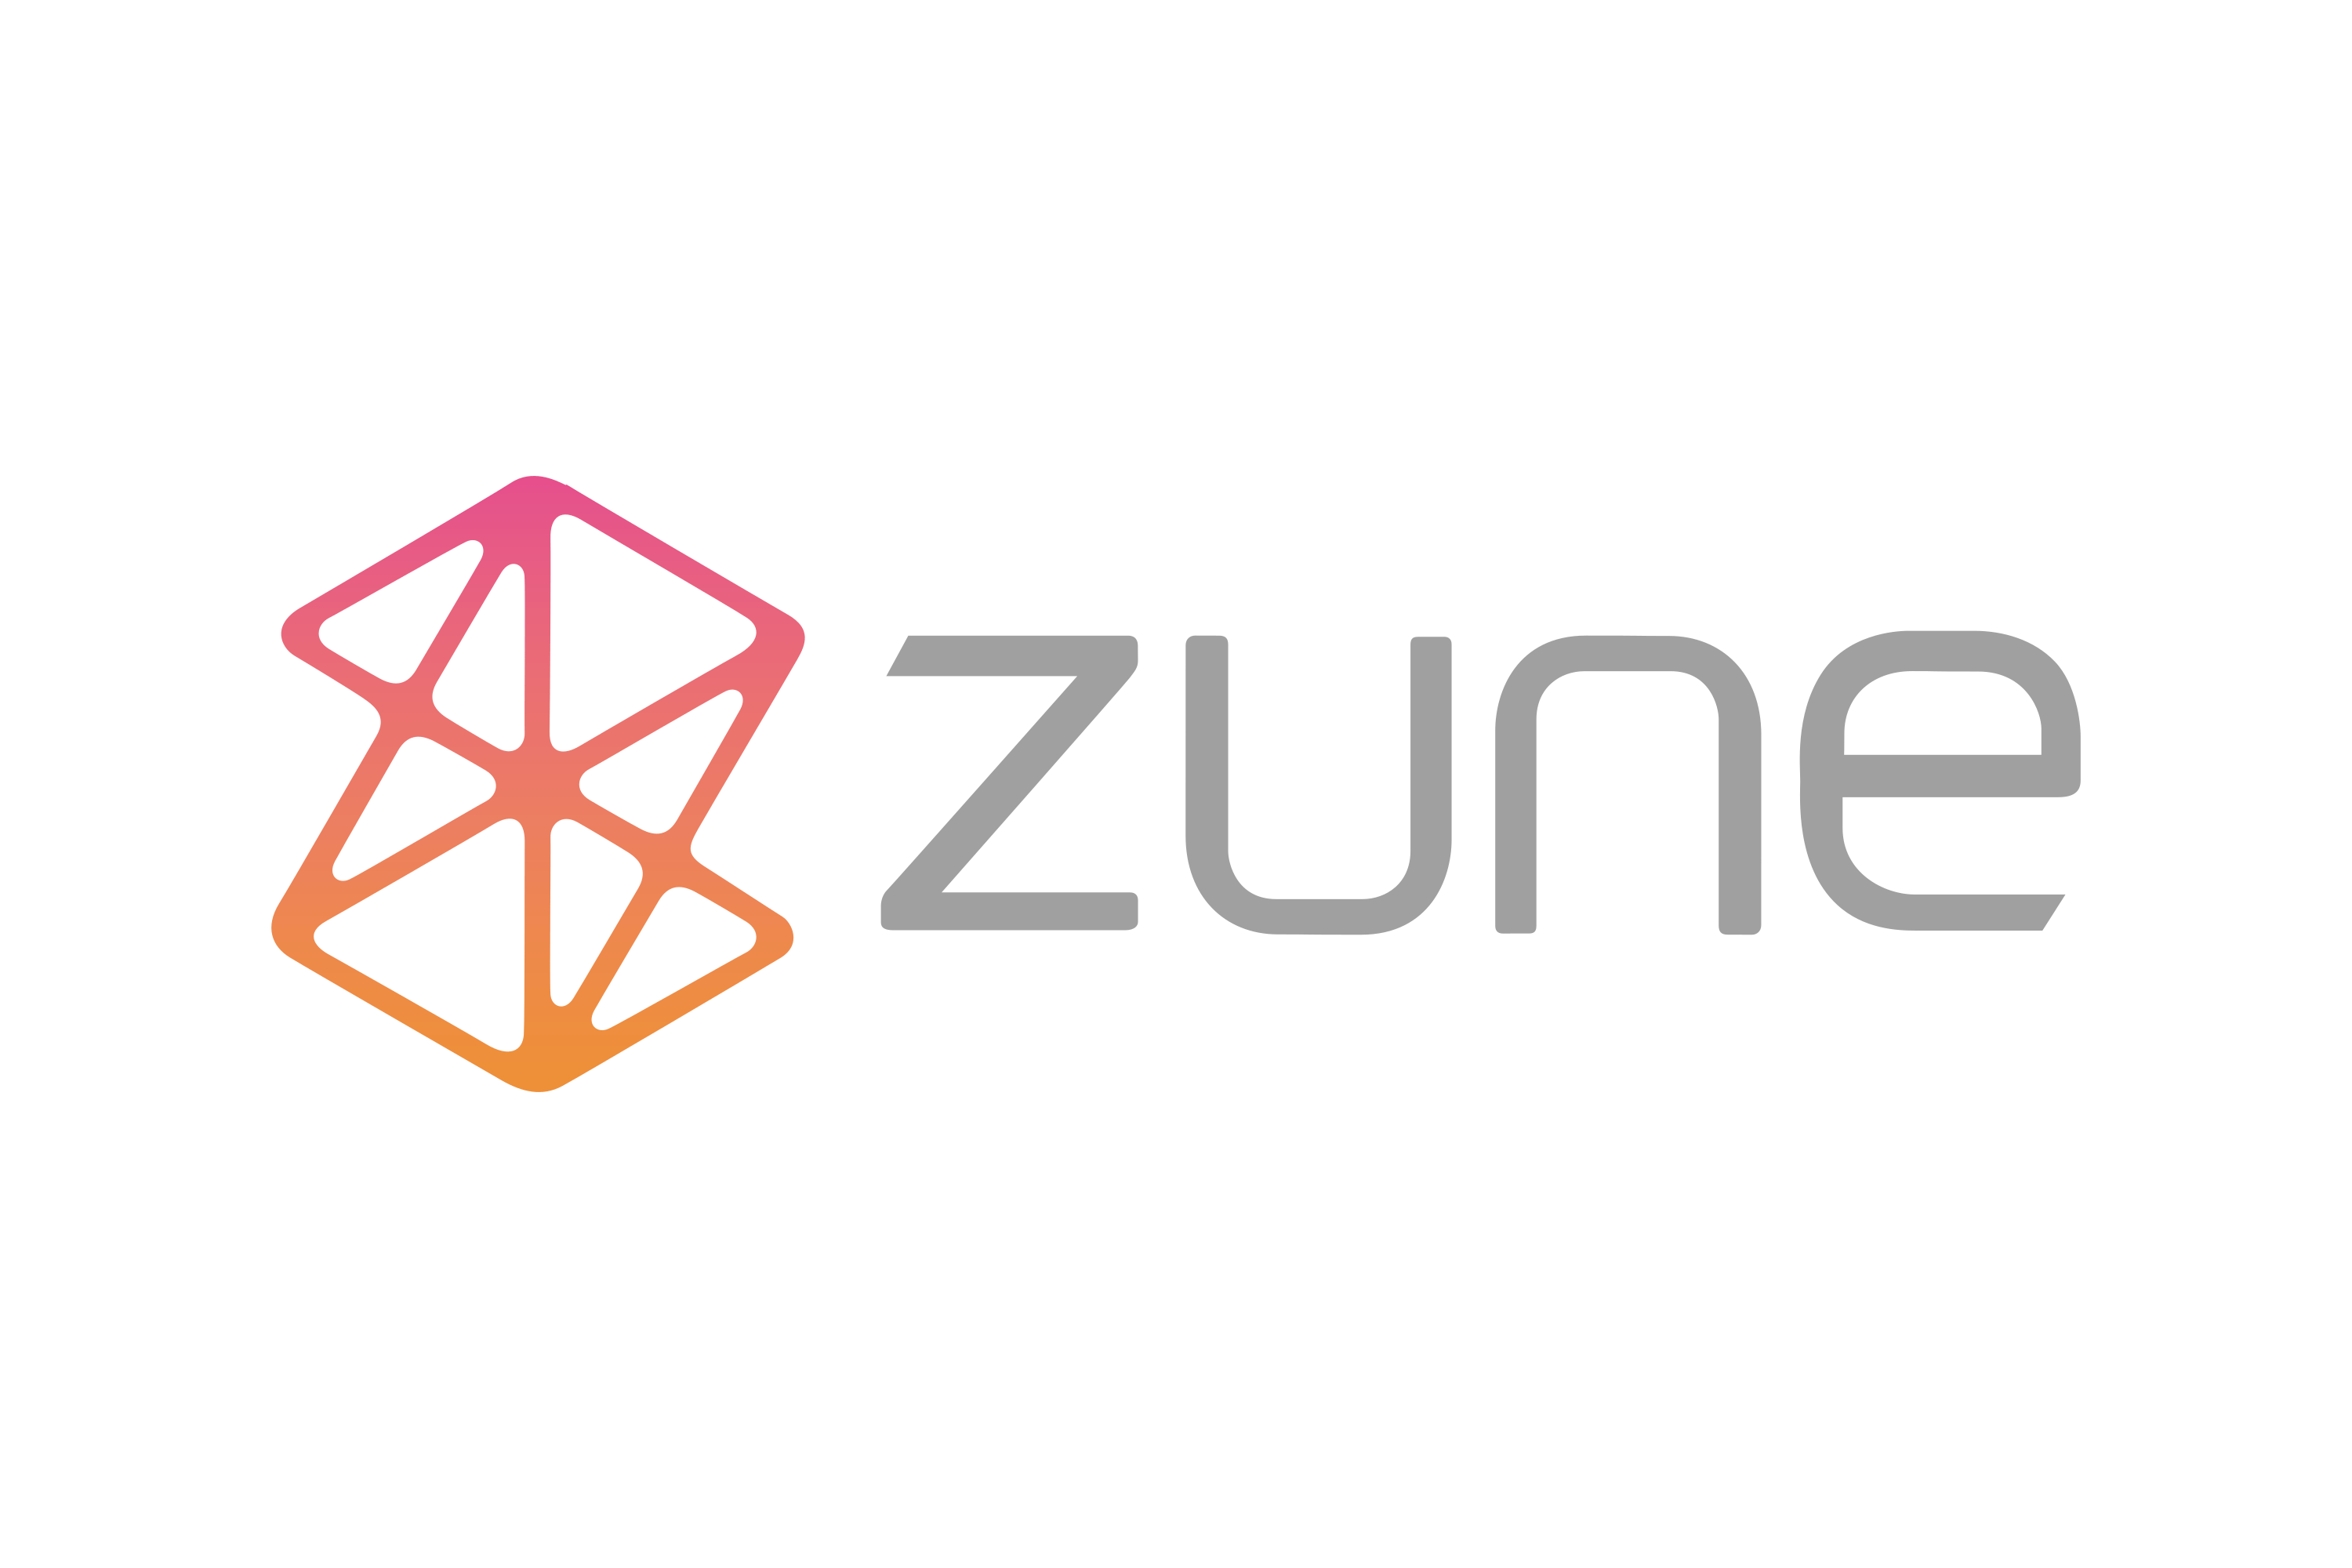 Download Zune Logo in SVG Vector or PNG File Format - Logo.wine